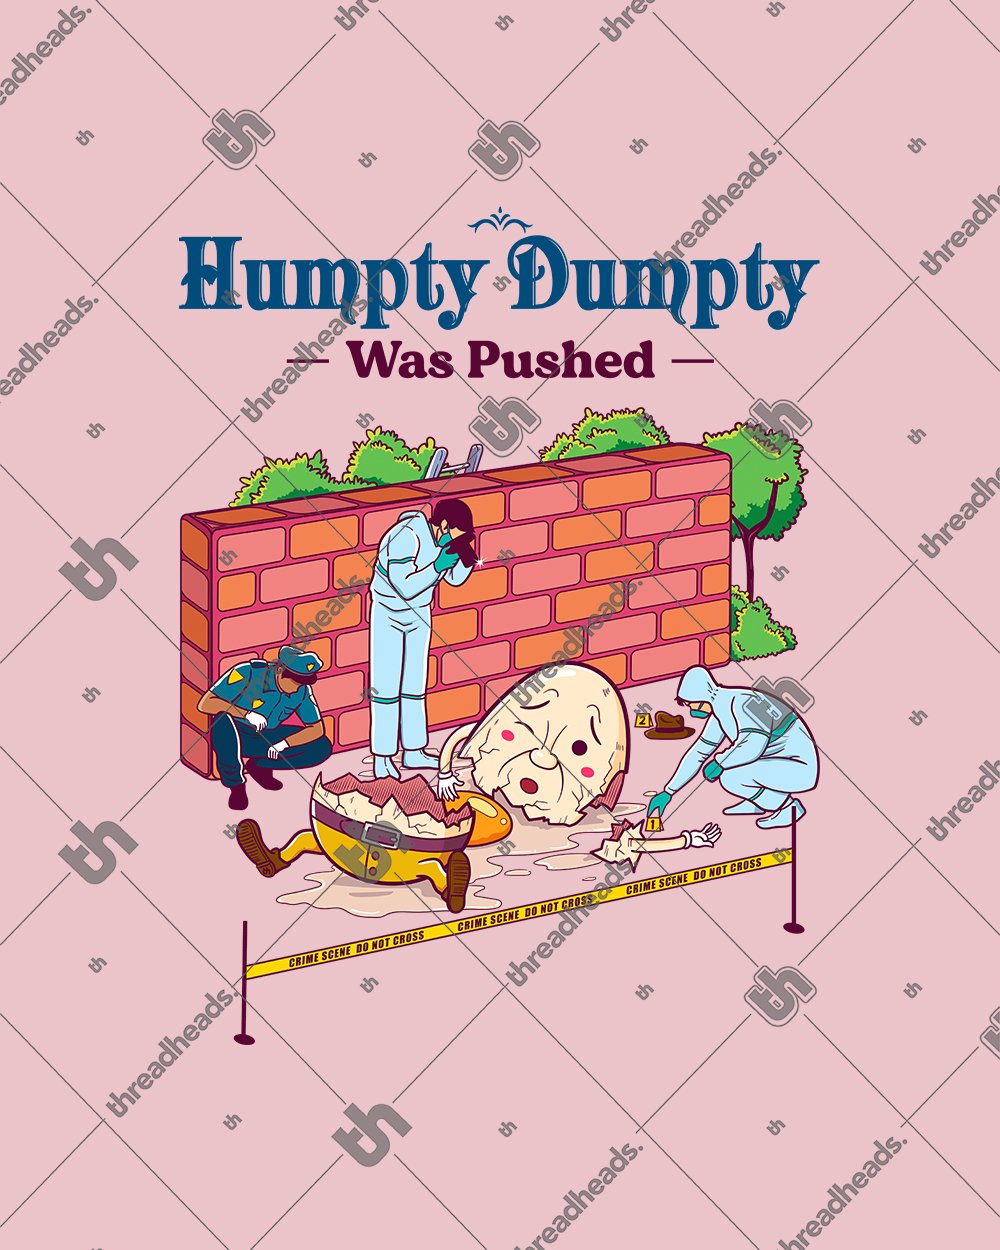 Humpty Dumpty was Pushed T-Shirt Australia Online #colour_pink